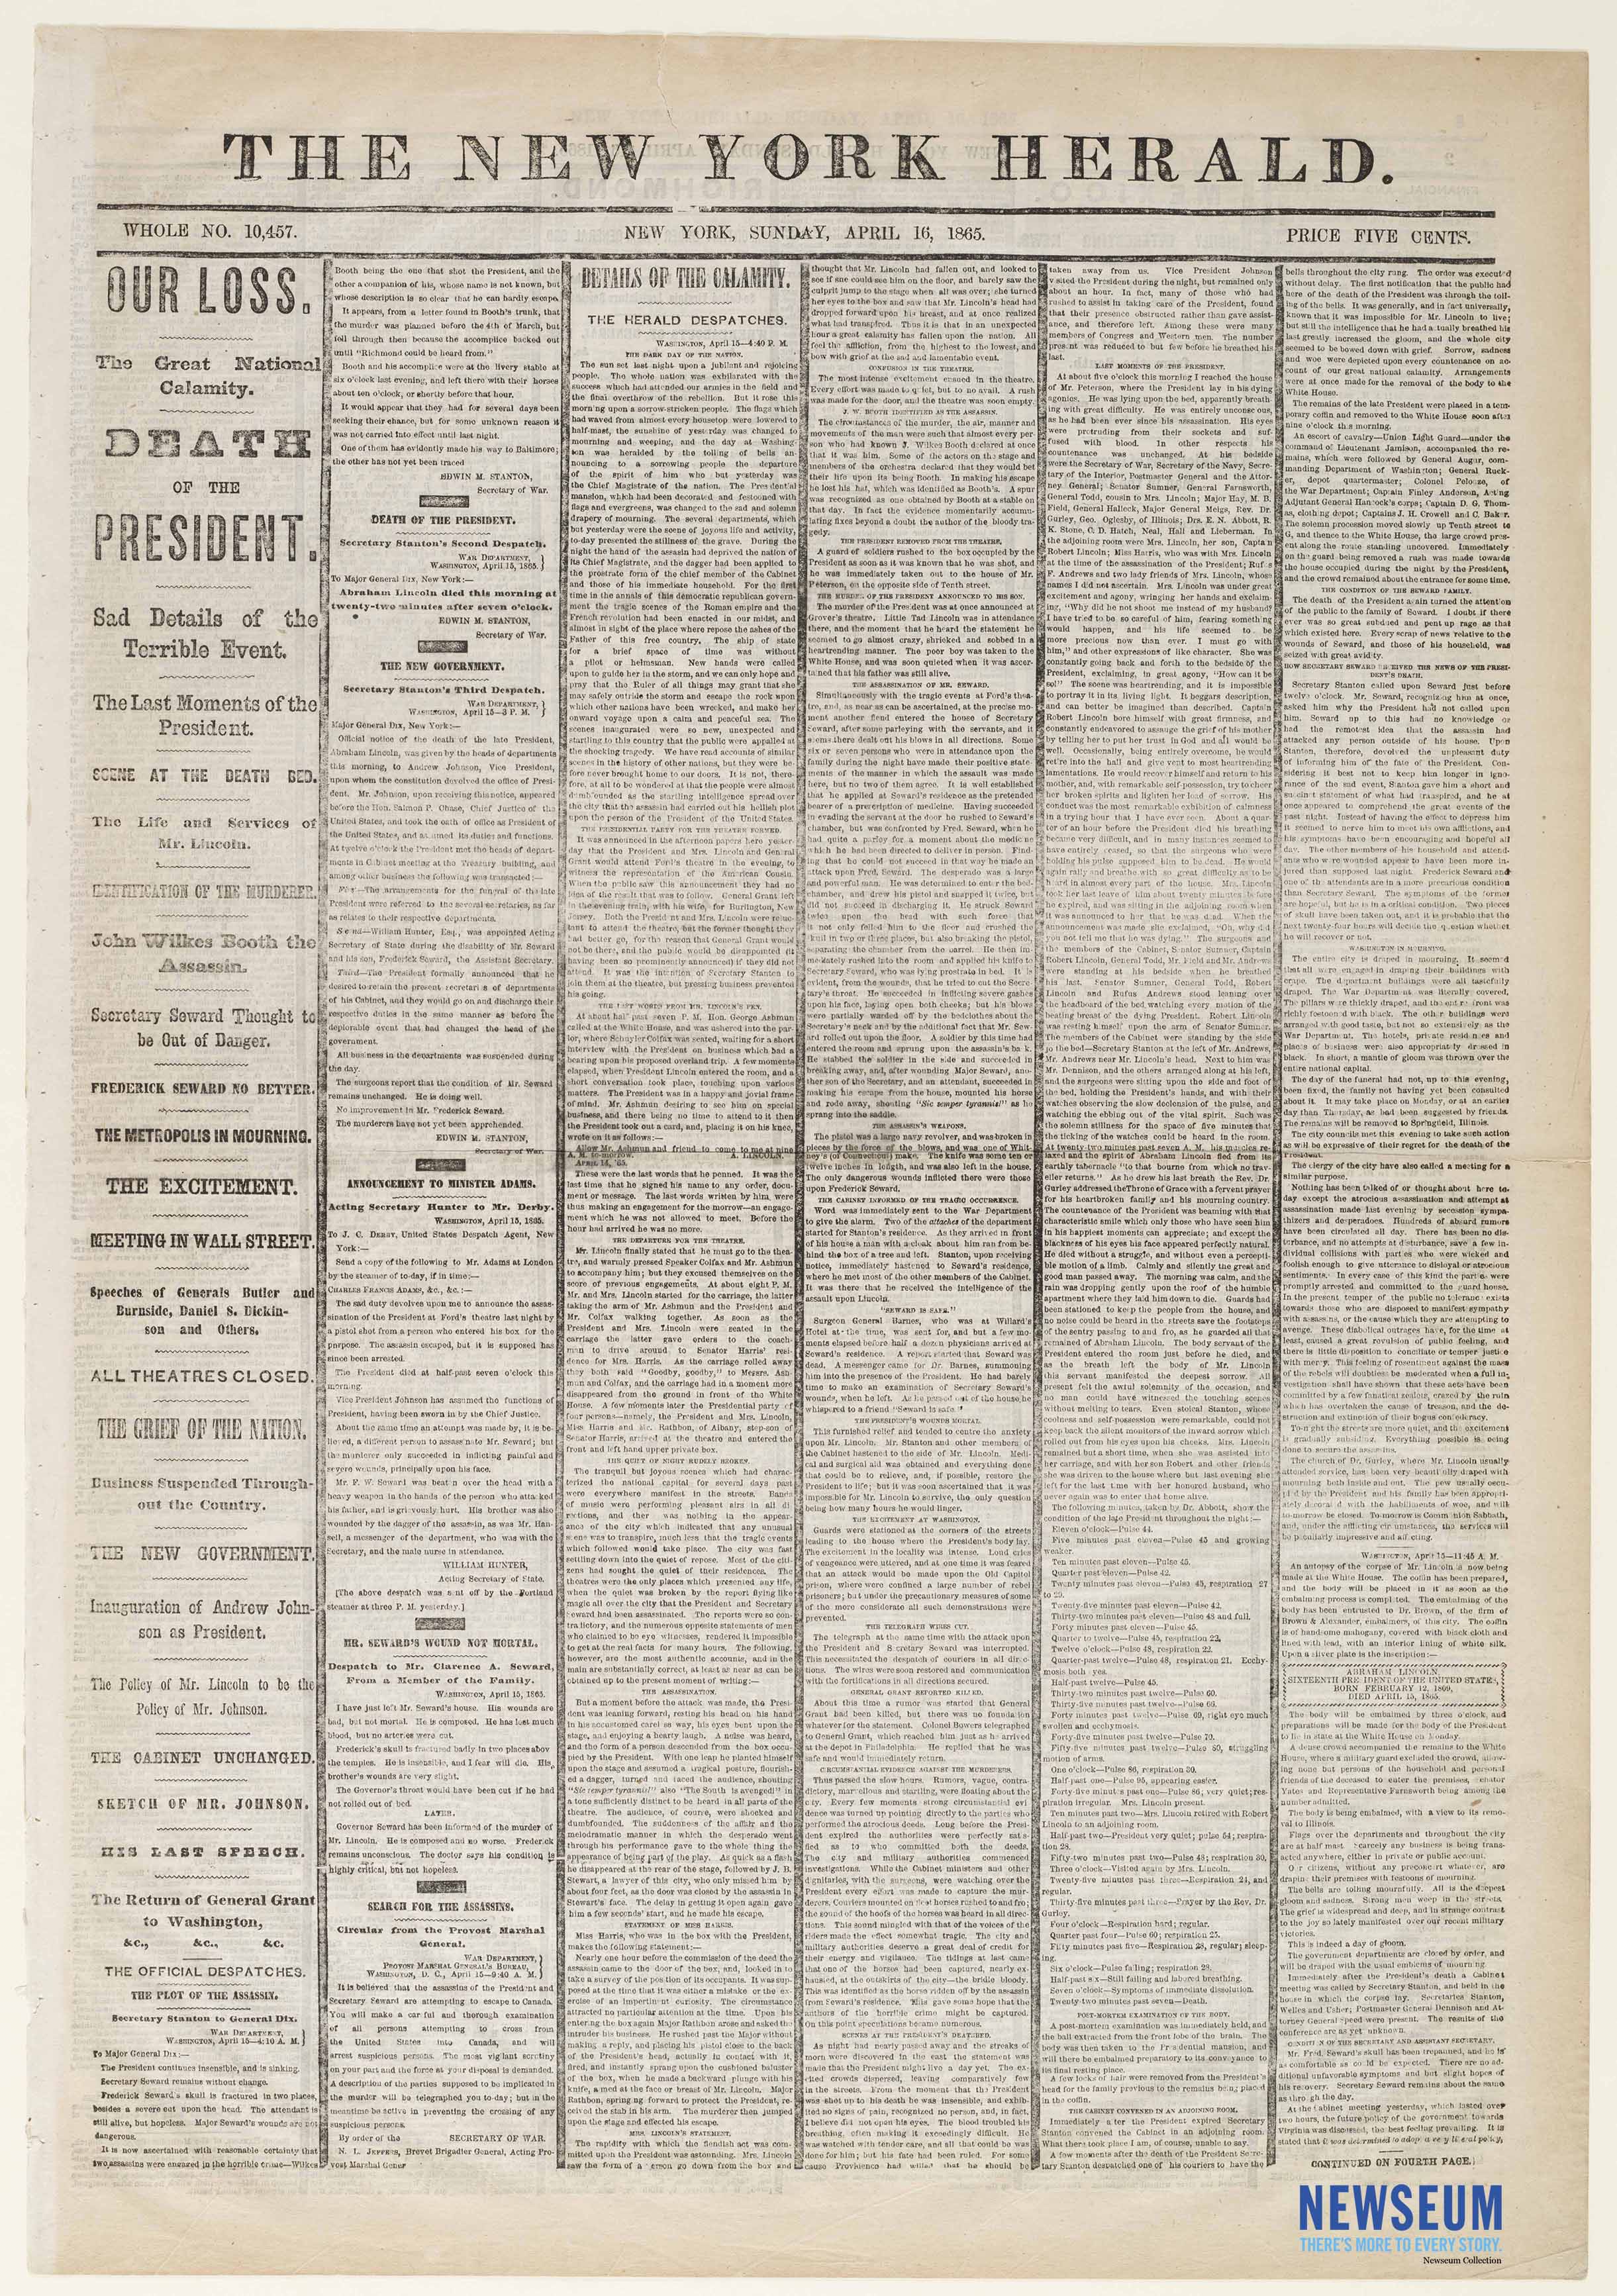 The New York Herald, April 16, 1865